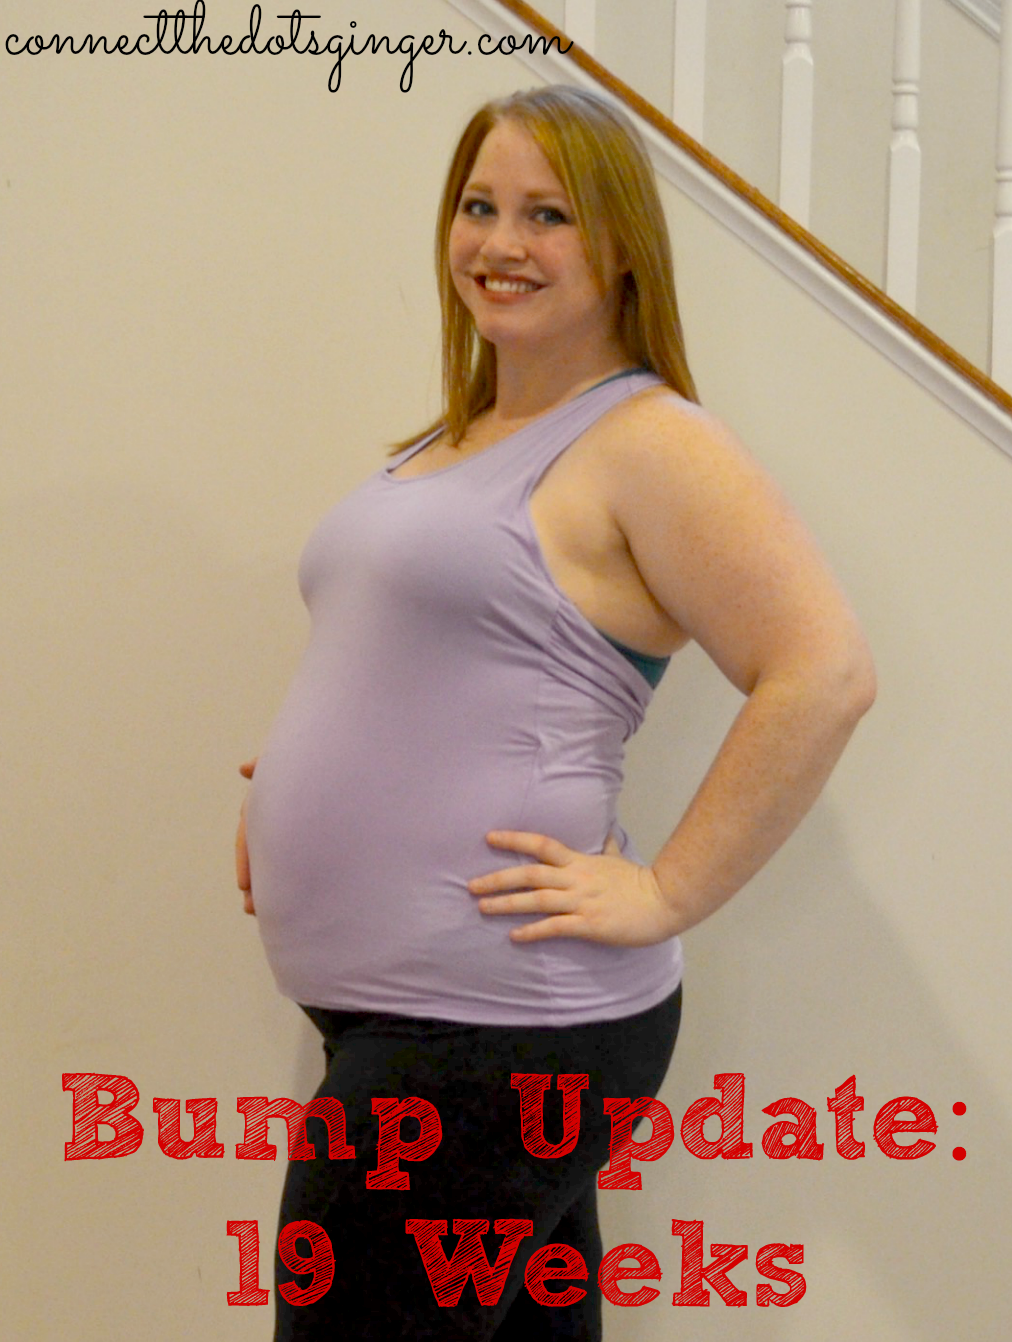 Connect the Dots Ginger | Becky Allen: Bump Update: 19 Weeks